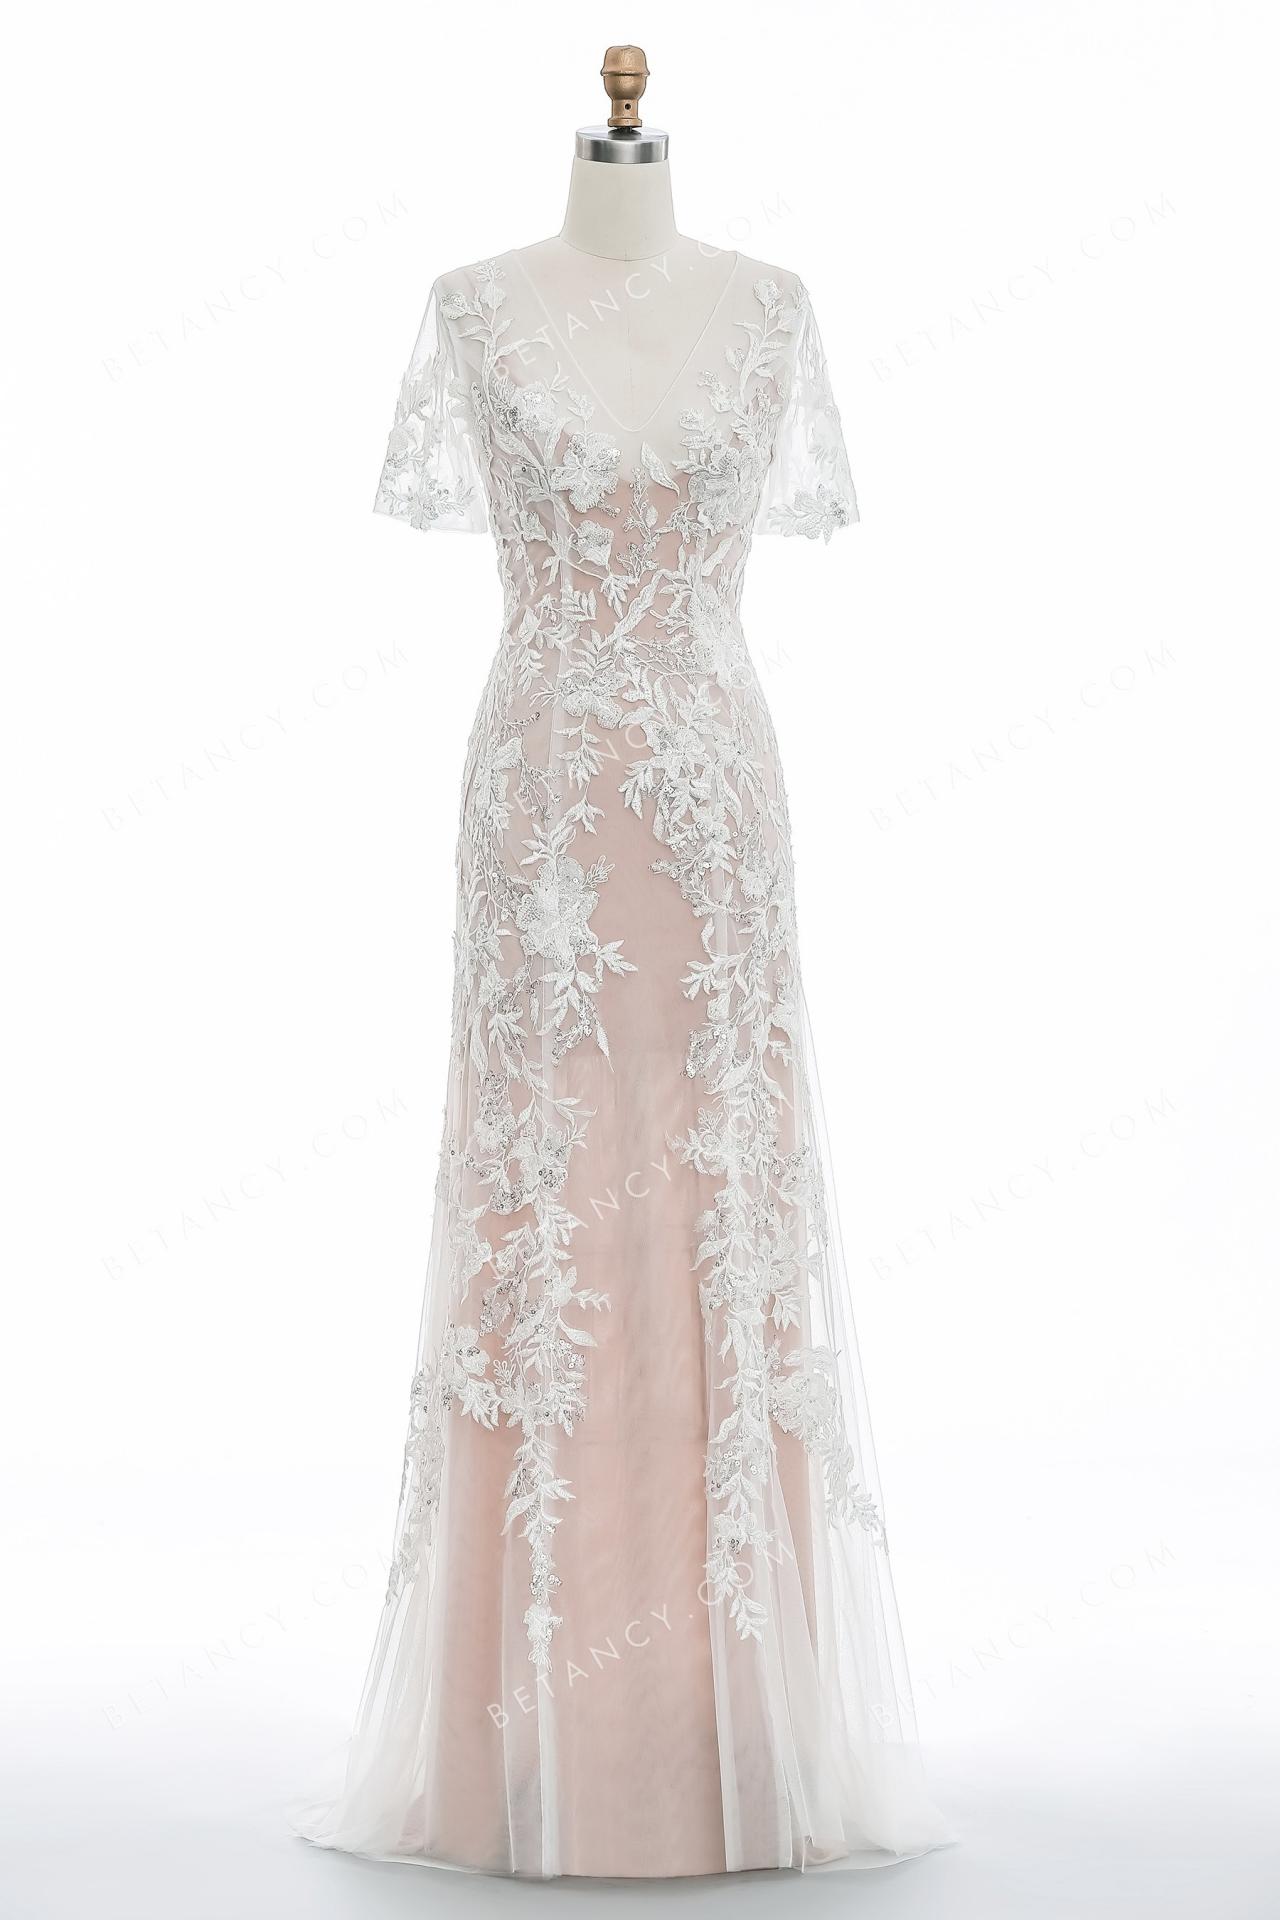 Beaded lace appliqued romantic wedding dress 6